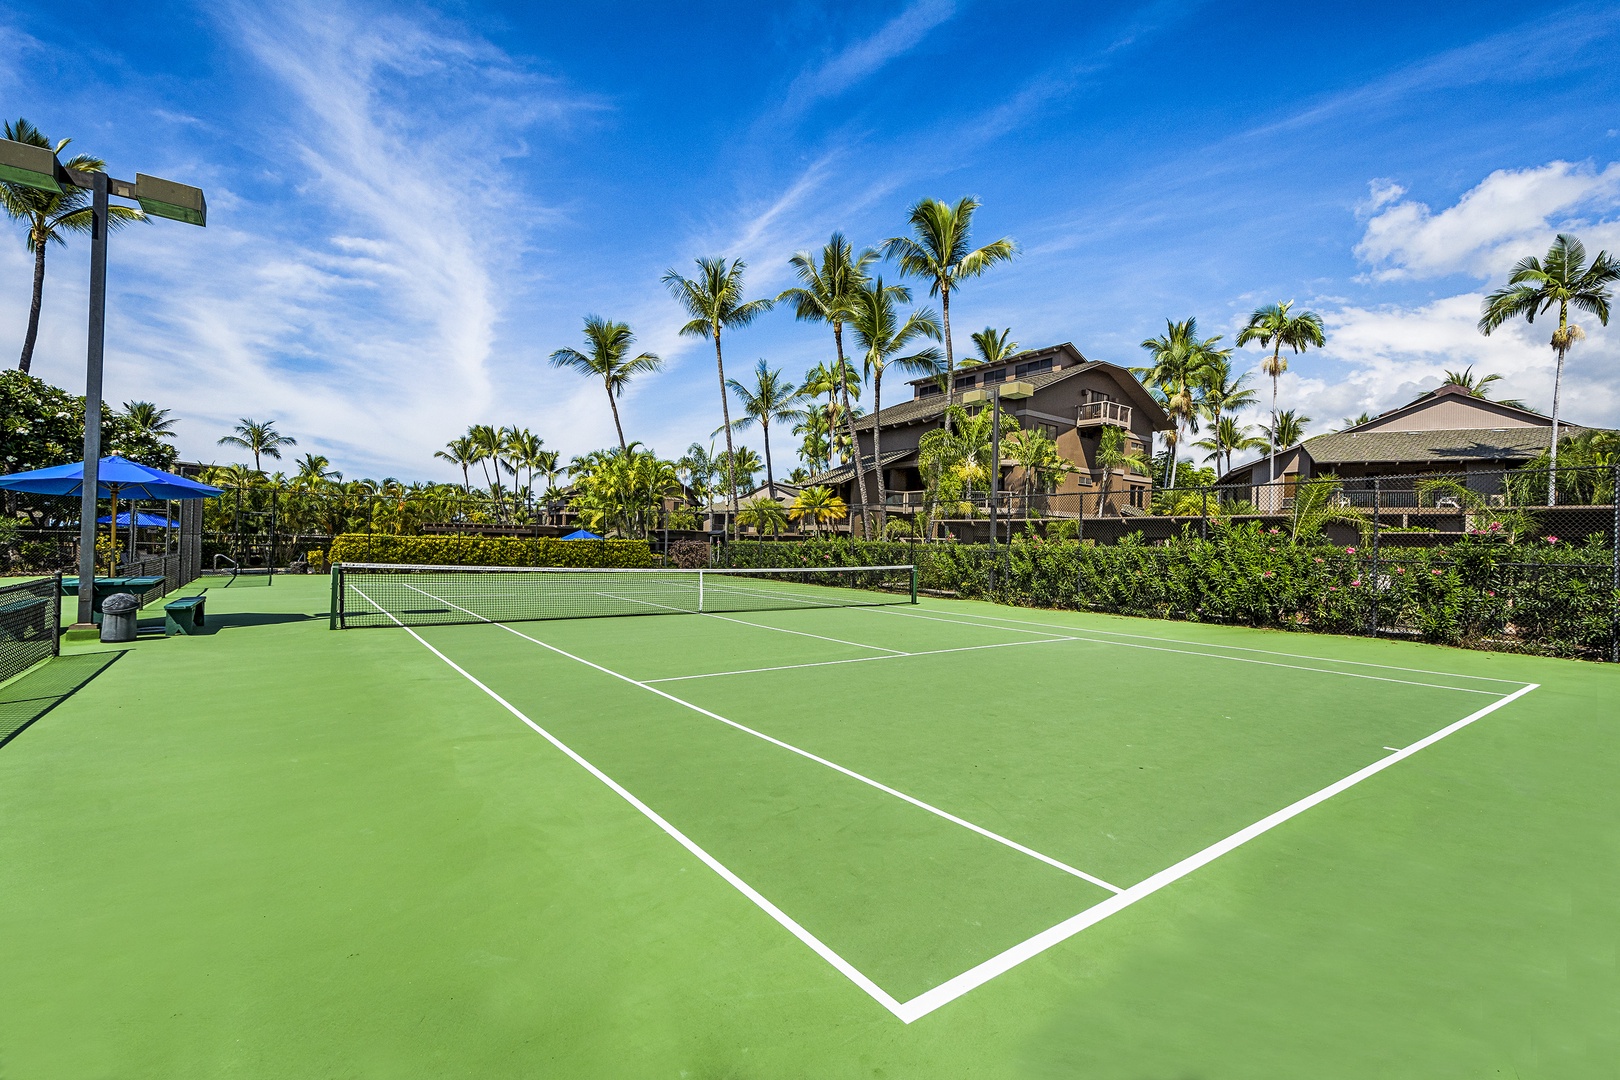 Kailua Kona Vacation Rentals, Kanaloa at Kona 1302 - Two tennis courts on site